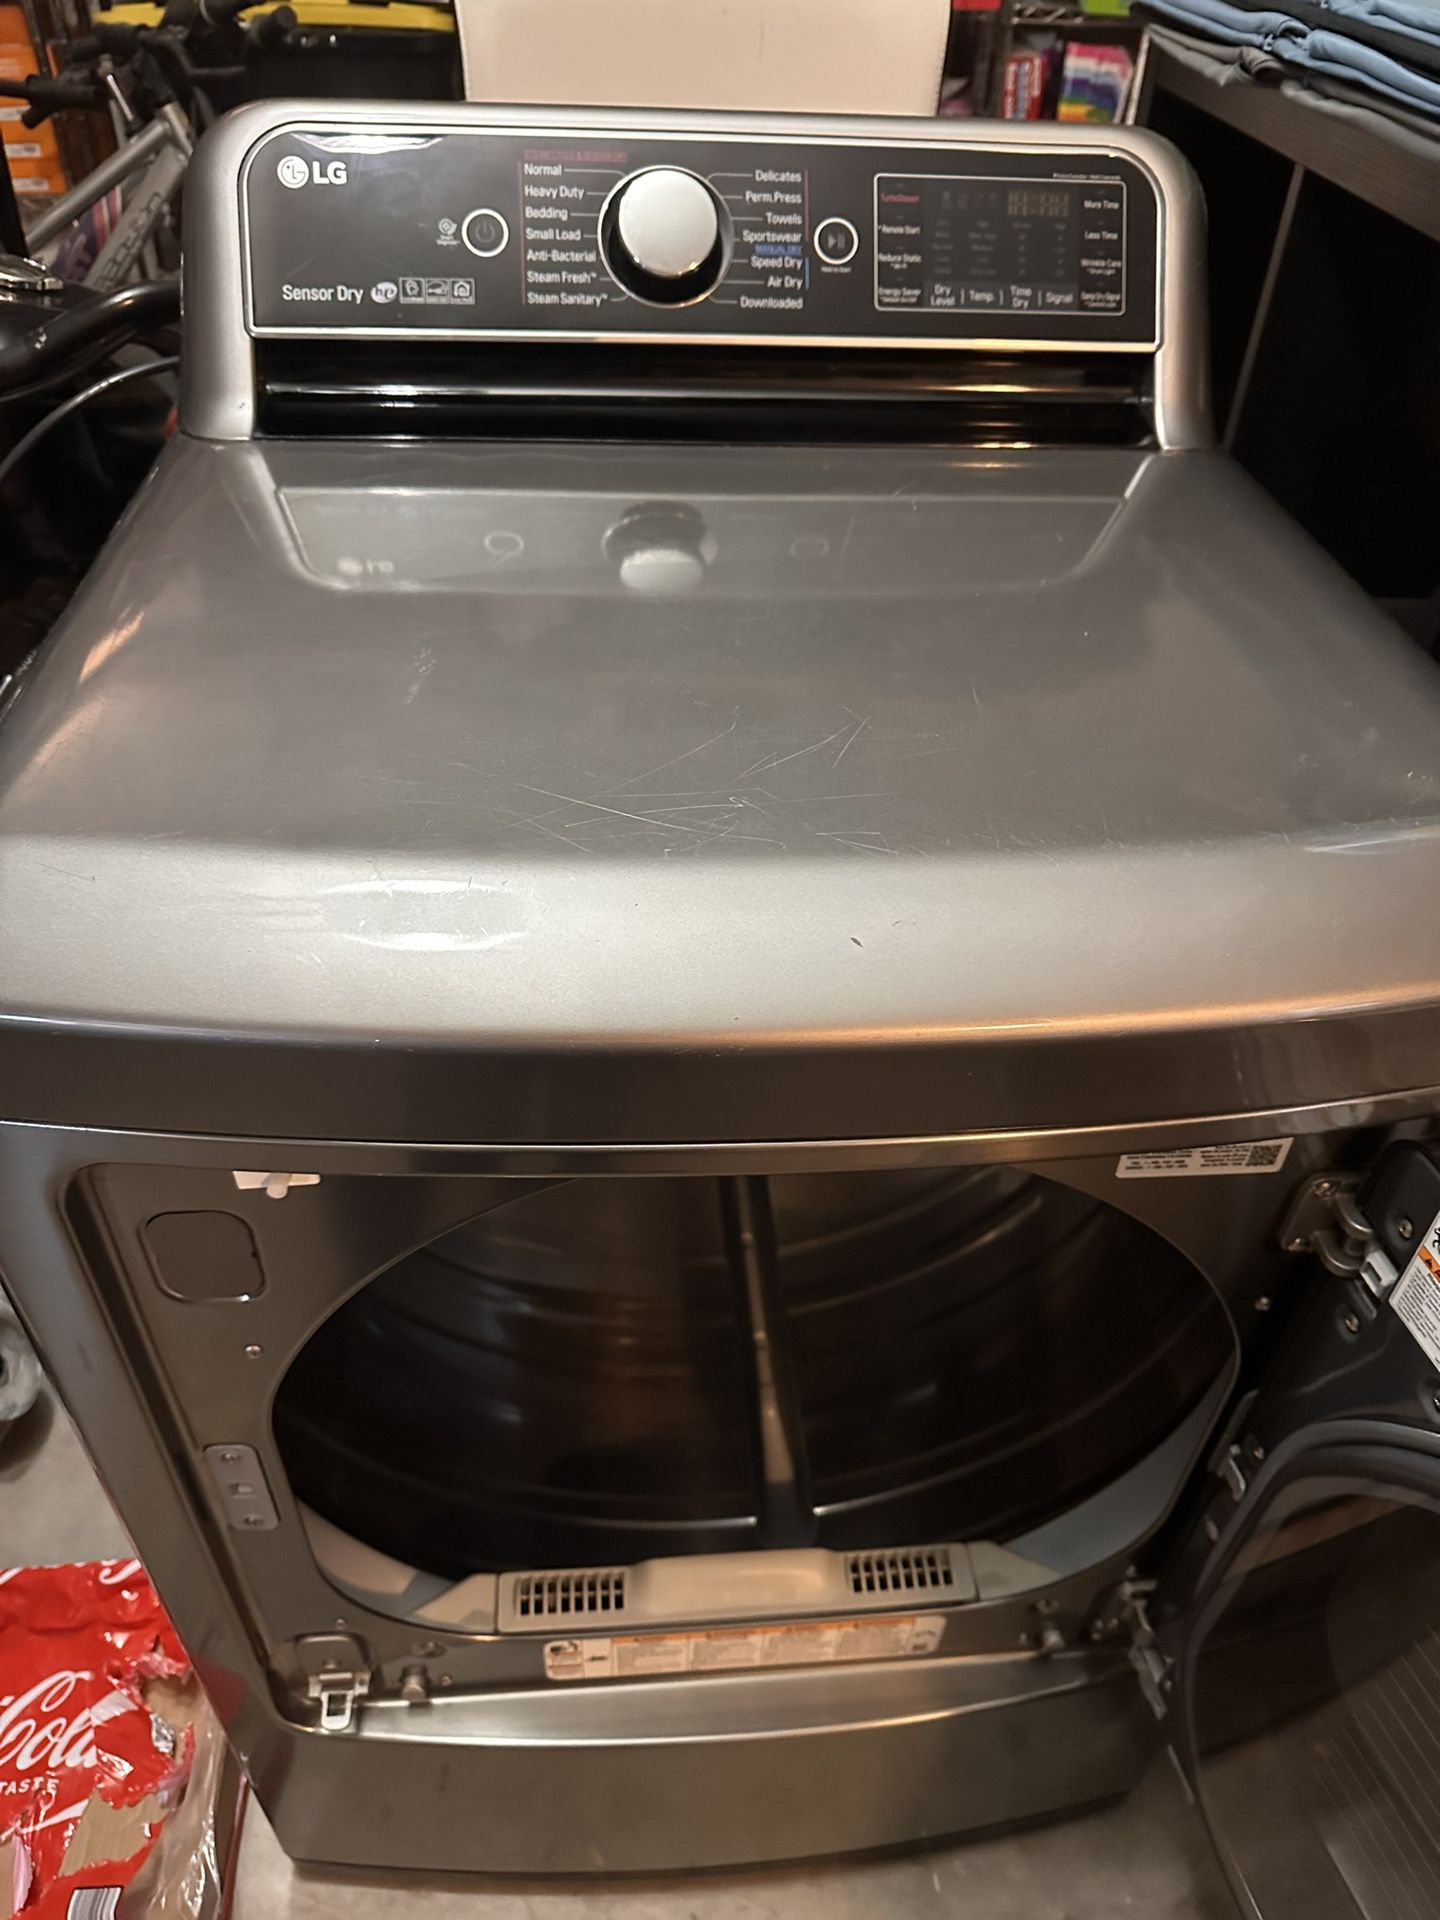 LG Large Dryer